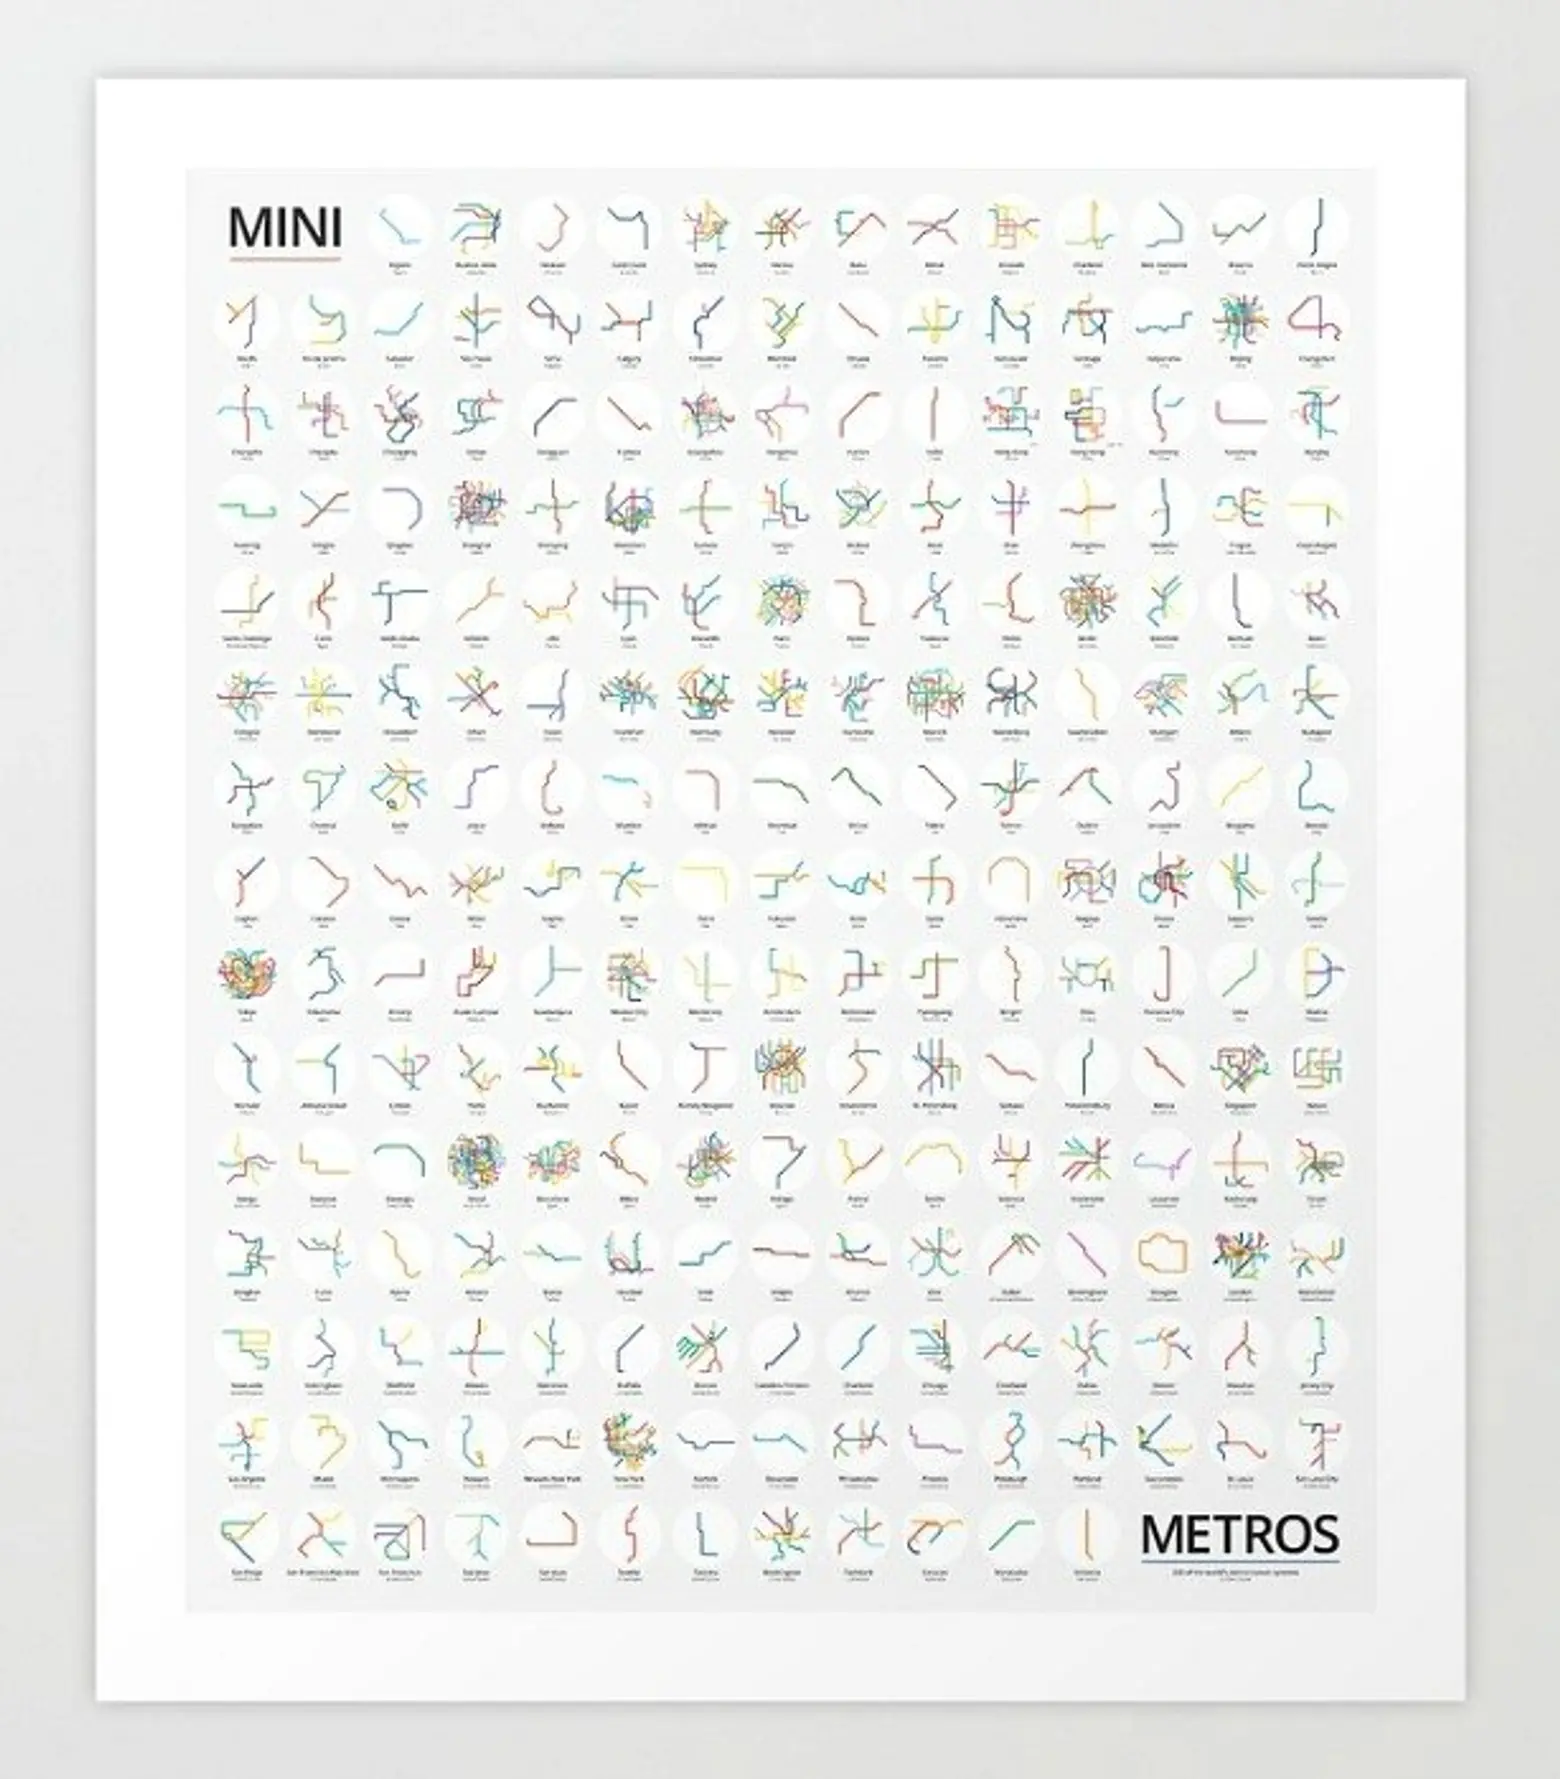 mini-metros-poster